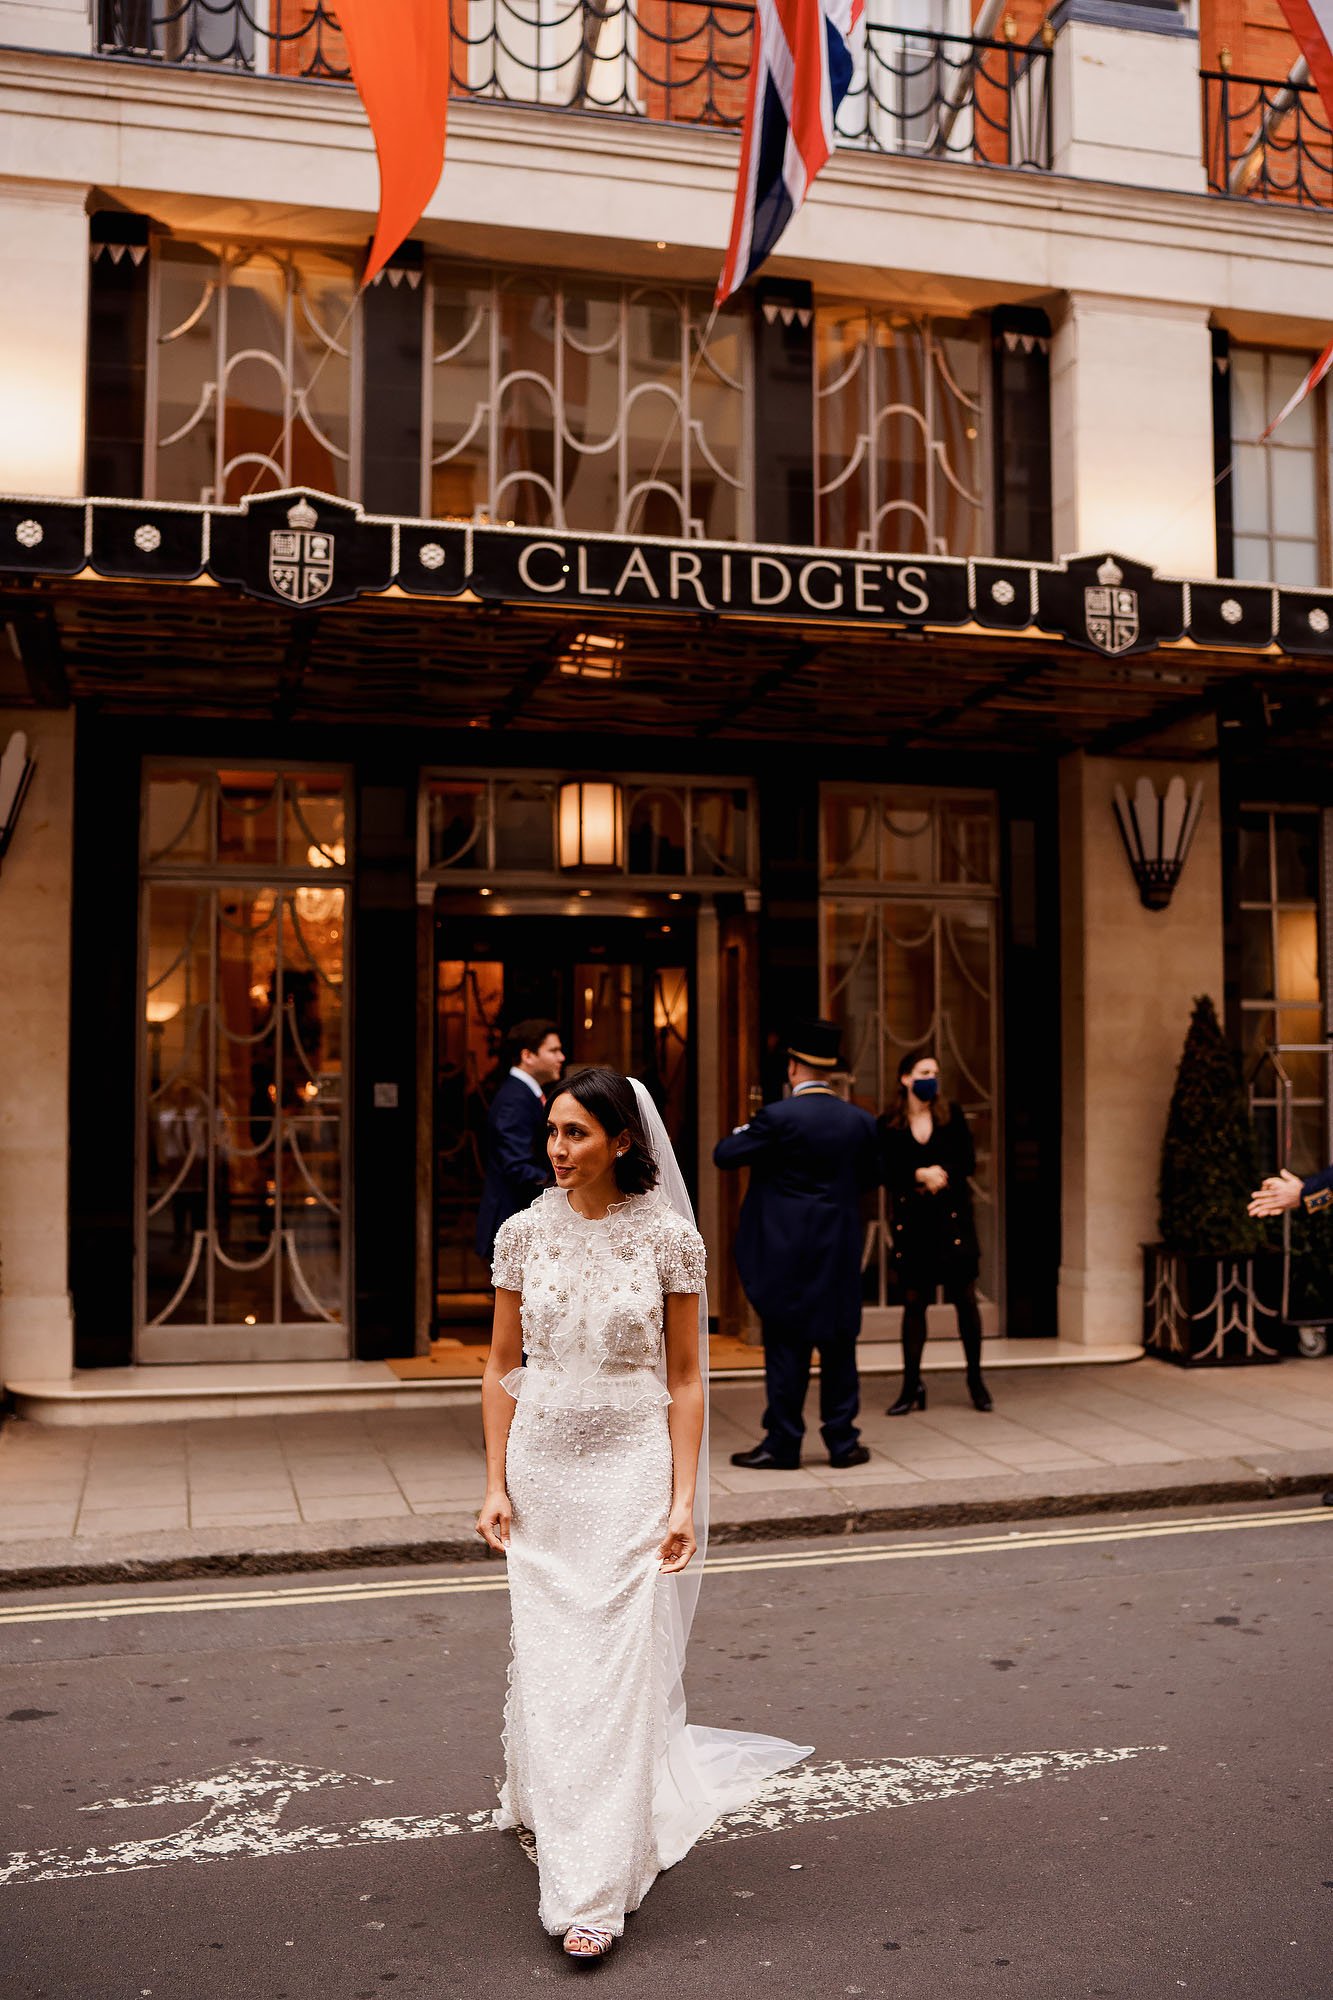 Claridges wedding london photography